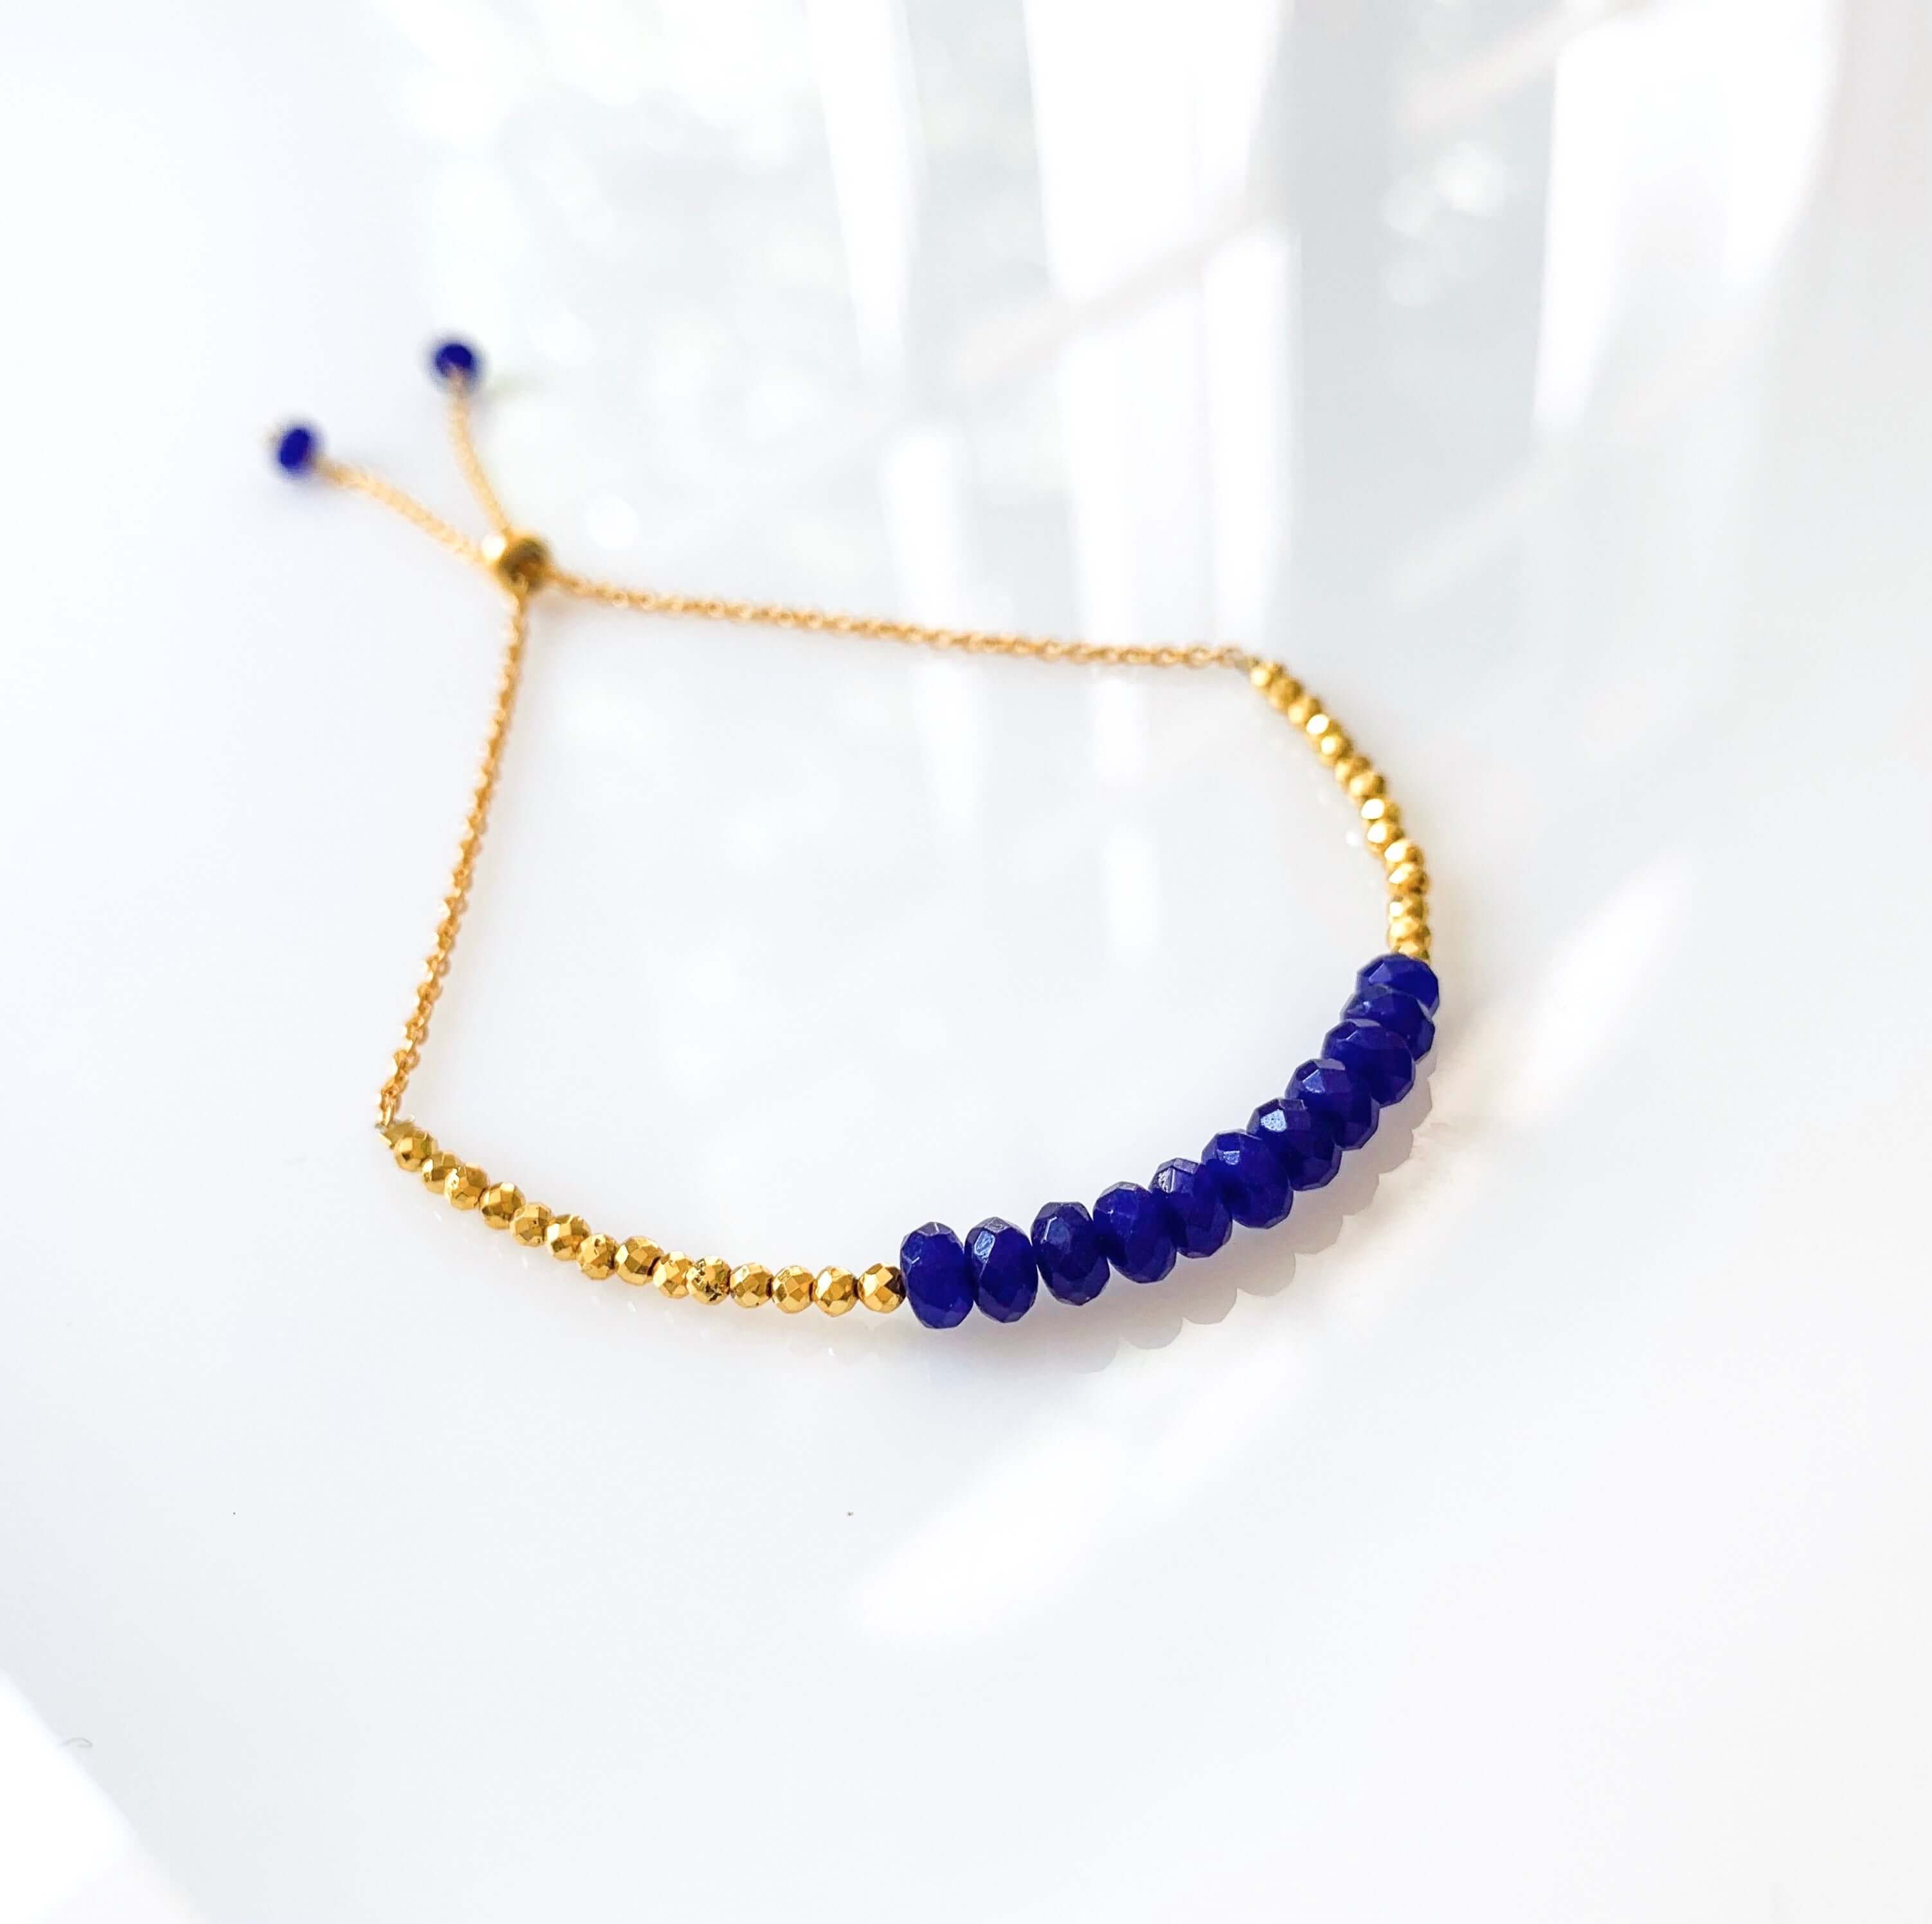 Exquisite Lapis Lazuli adjustable bracelets, adorned with genuine gemstones